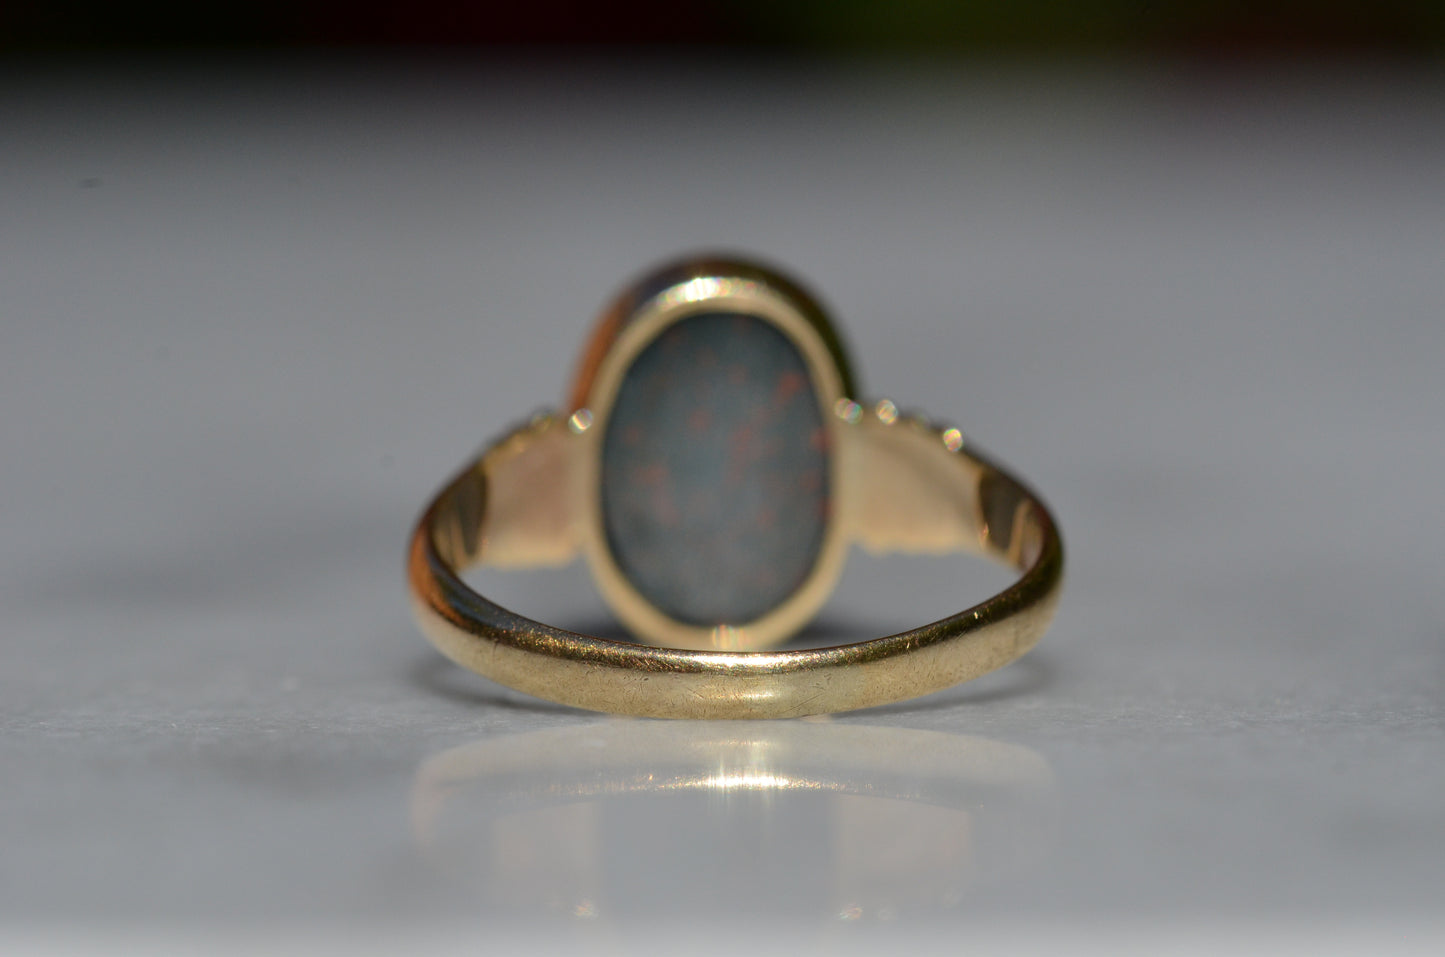 Stunning Vintage Bloodstone Ring